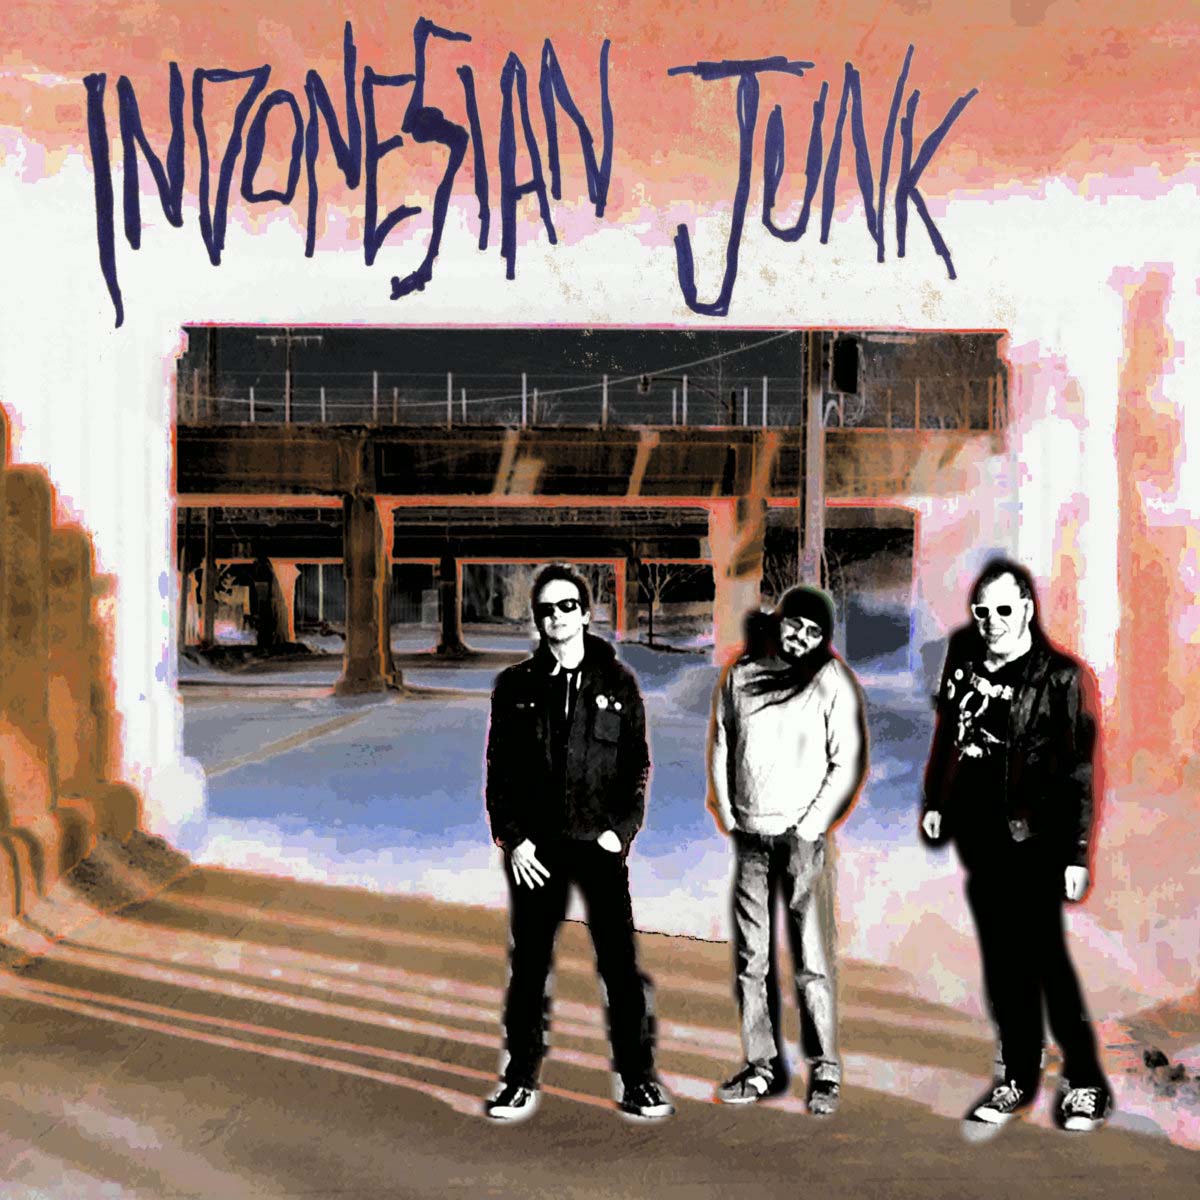 Indonesian Junk- S/T LP (Sale price!)